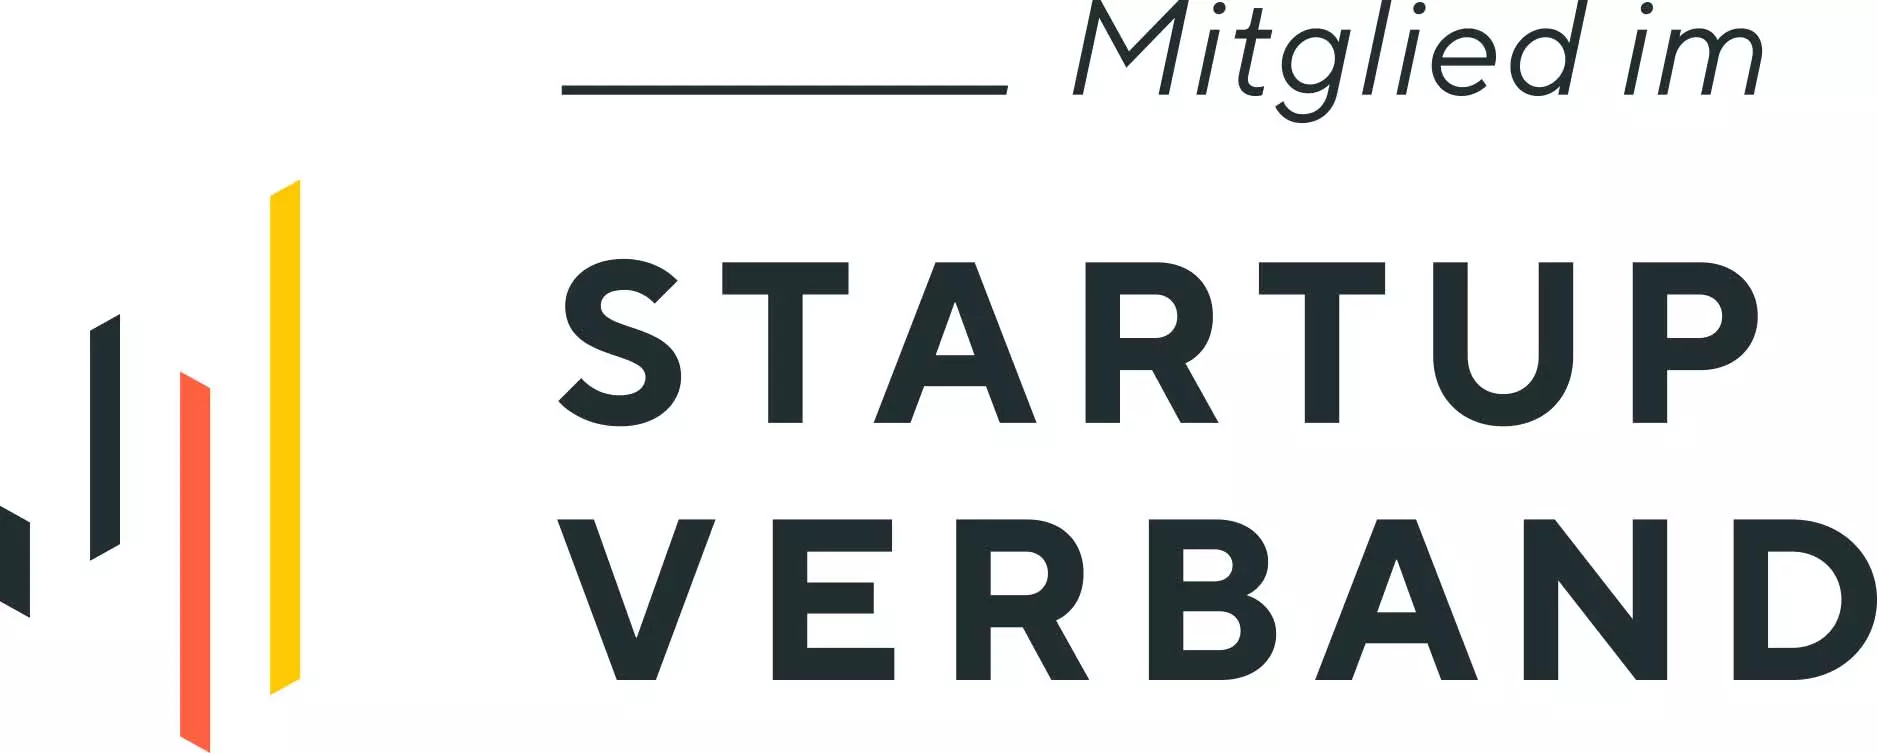 Mitglied im Bundesverband Deutsche Startups e. V.